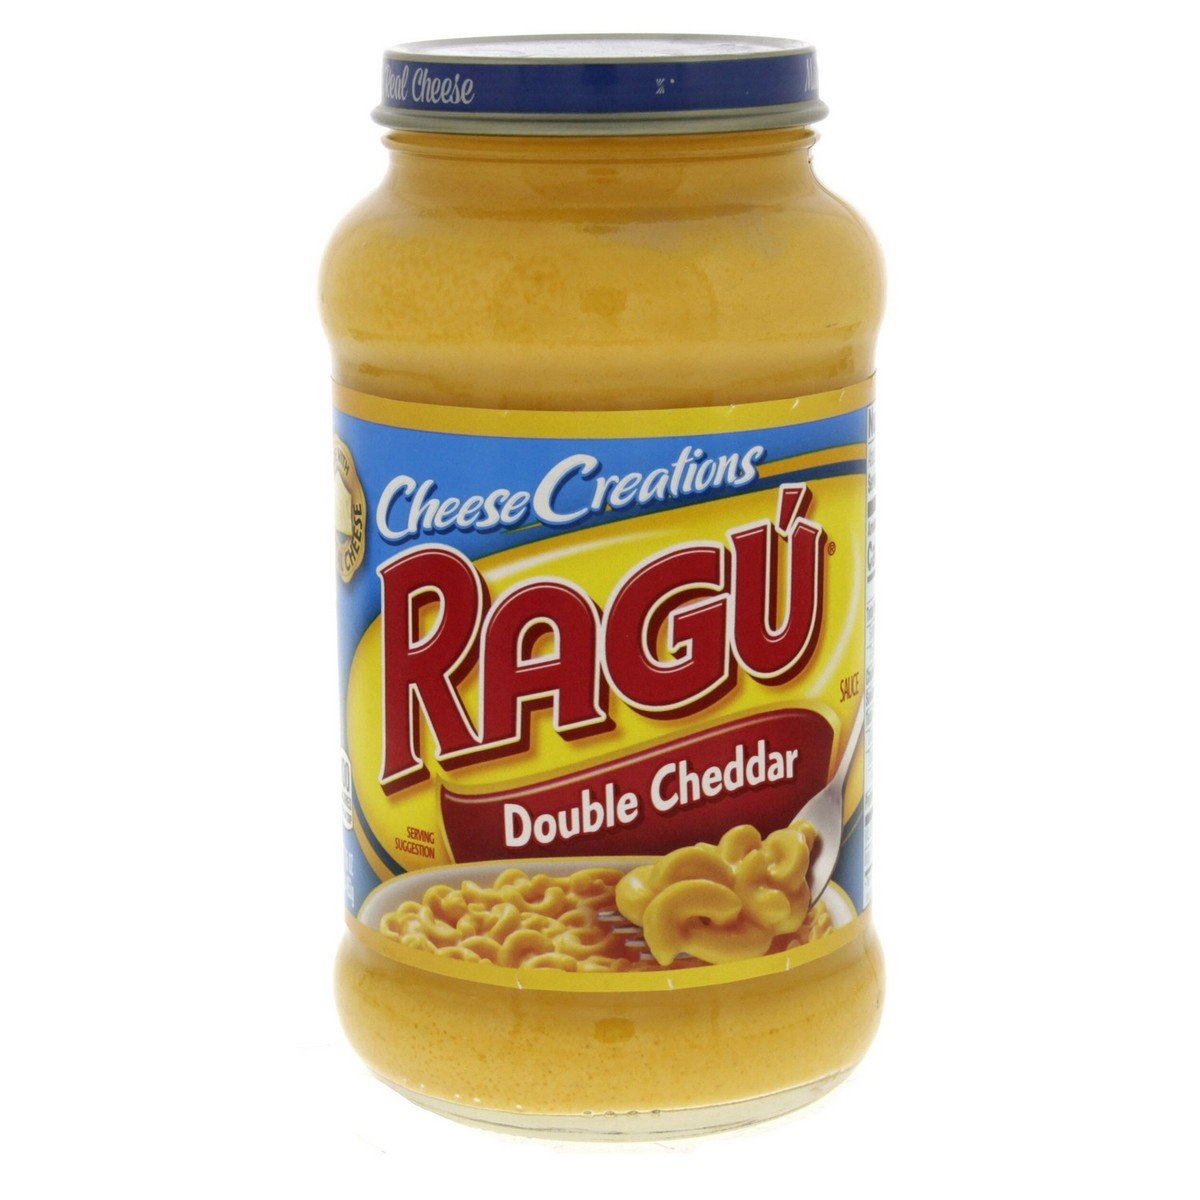 Ragu Cheese Creations Double Cheddar Sauce 453 g